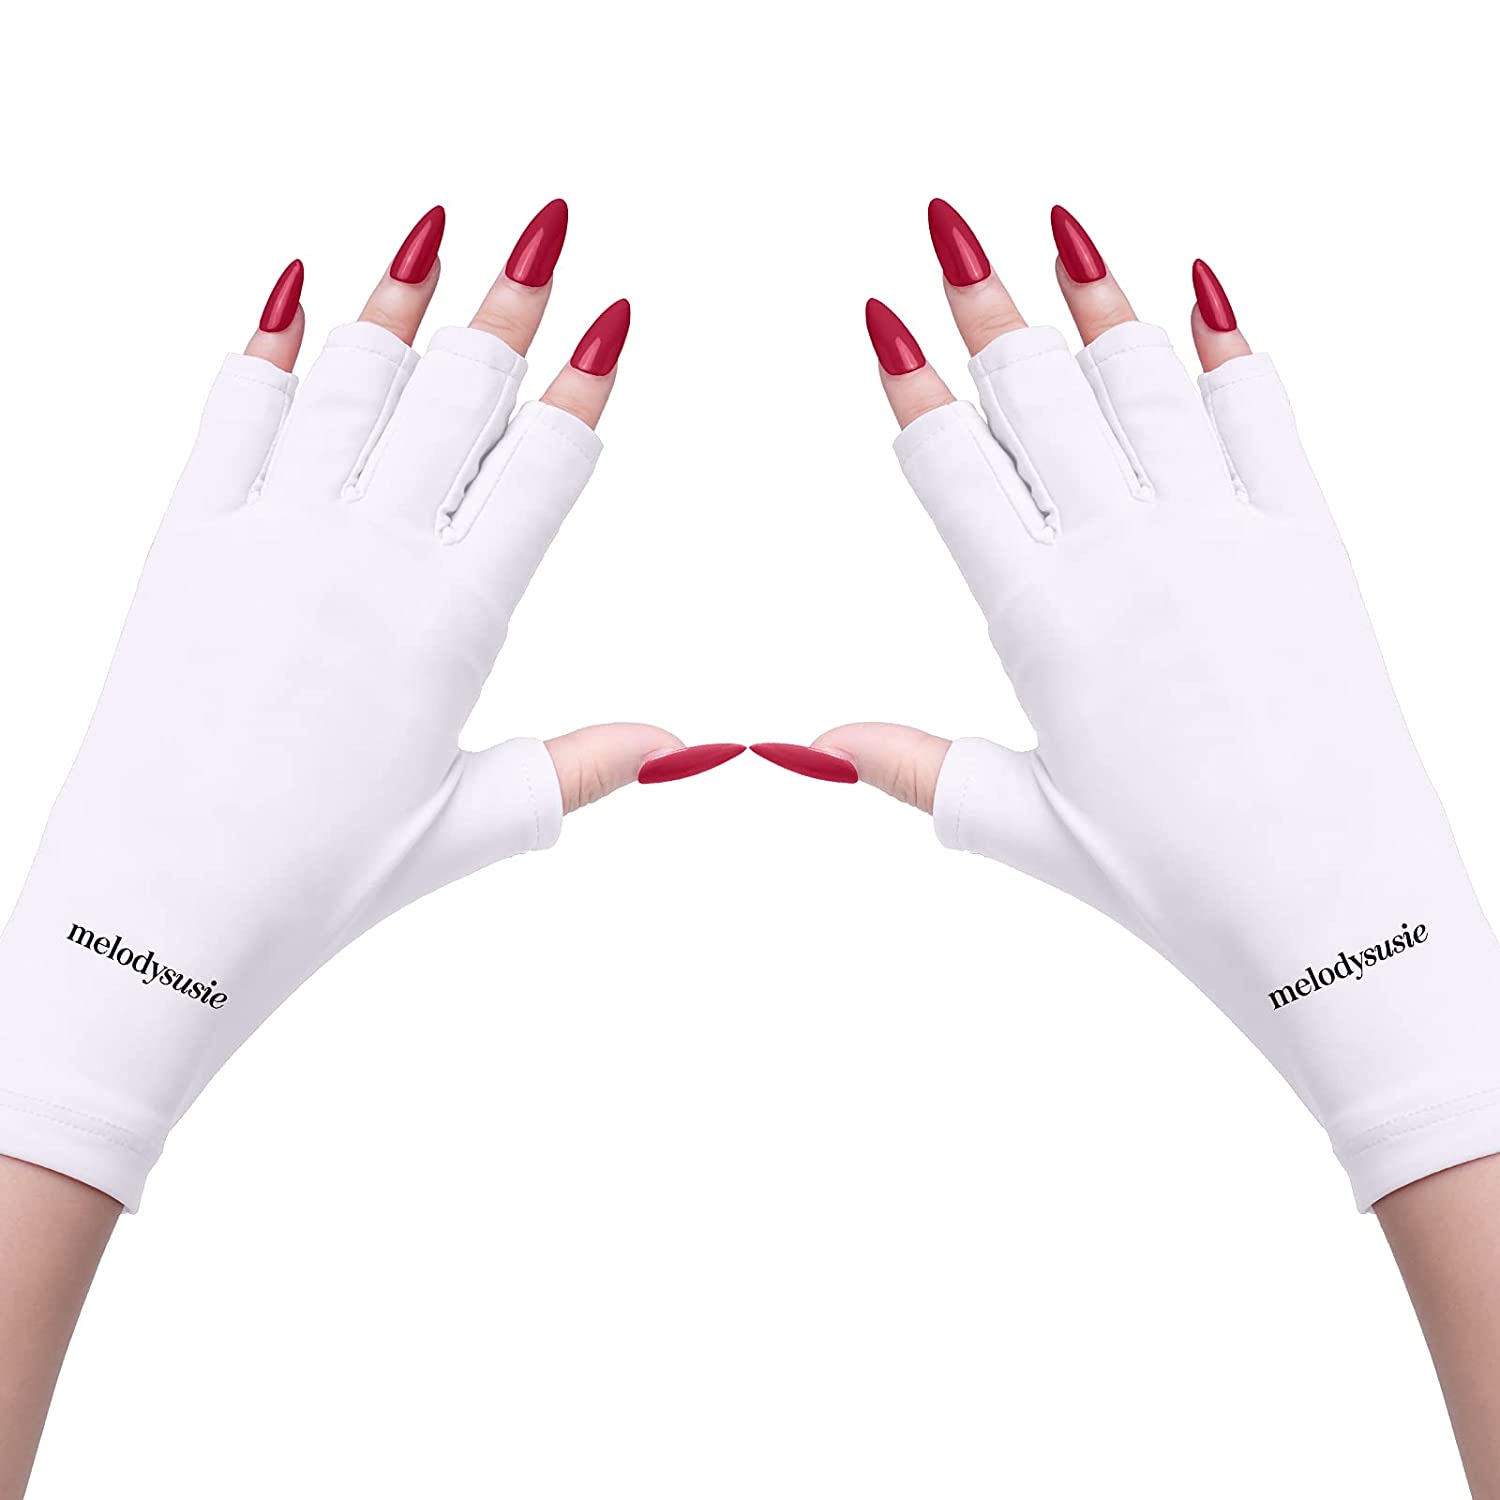 UV Shield LYCRA Gloves for manicure at home or salon